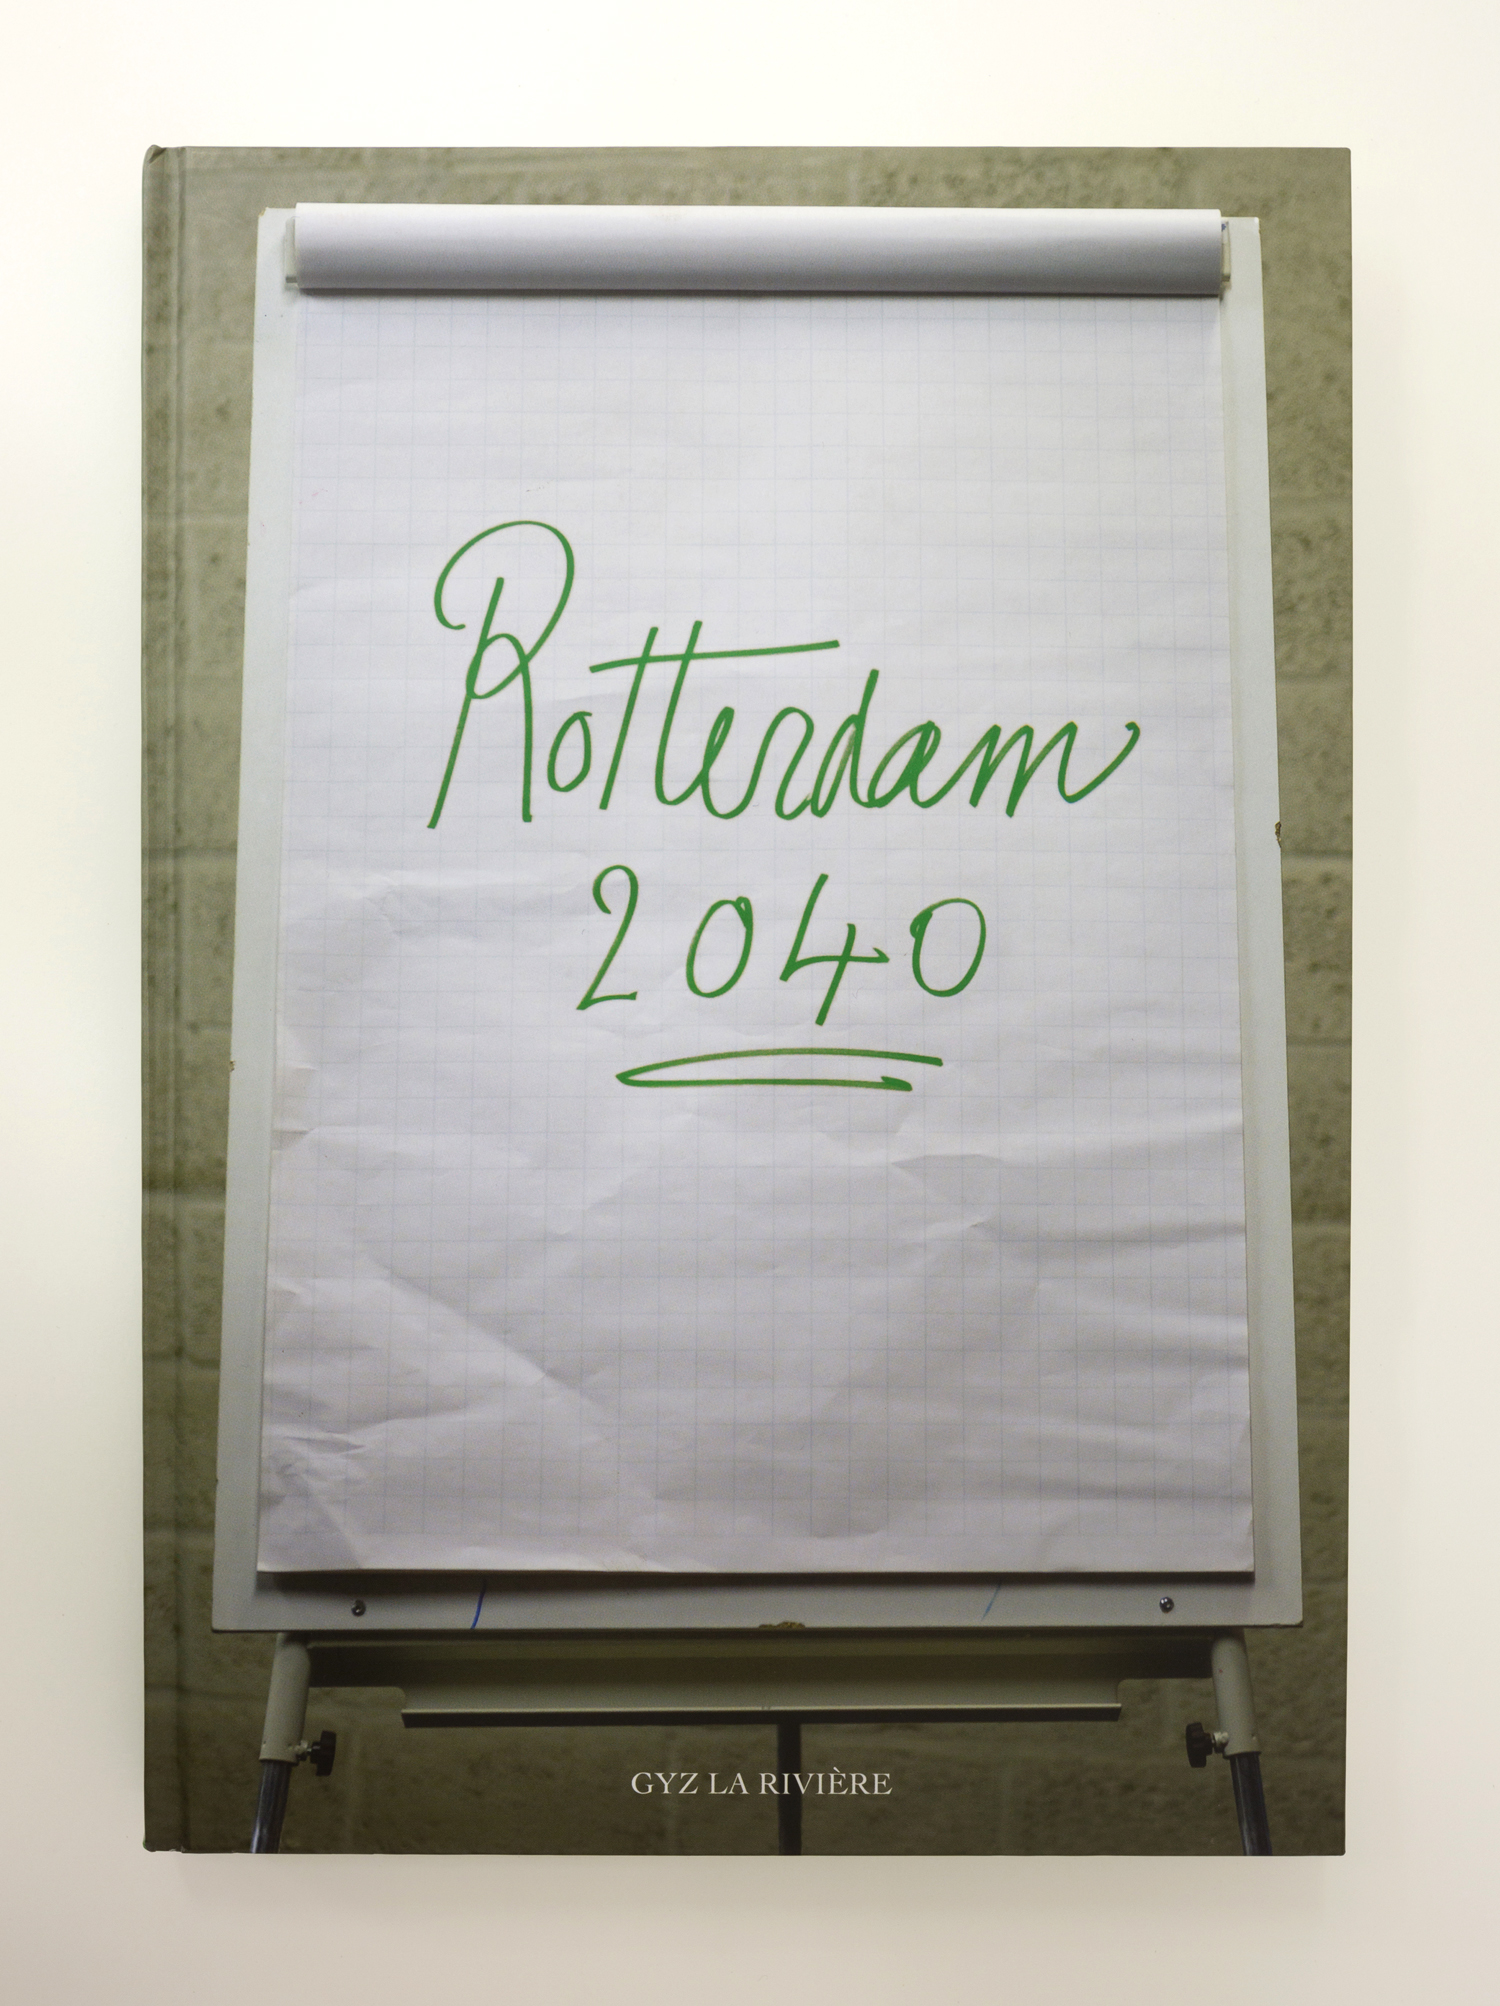 Rotterdam 2040 book